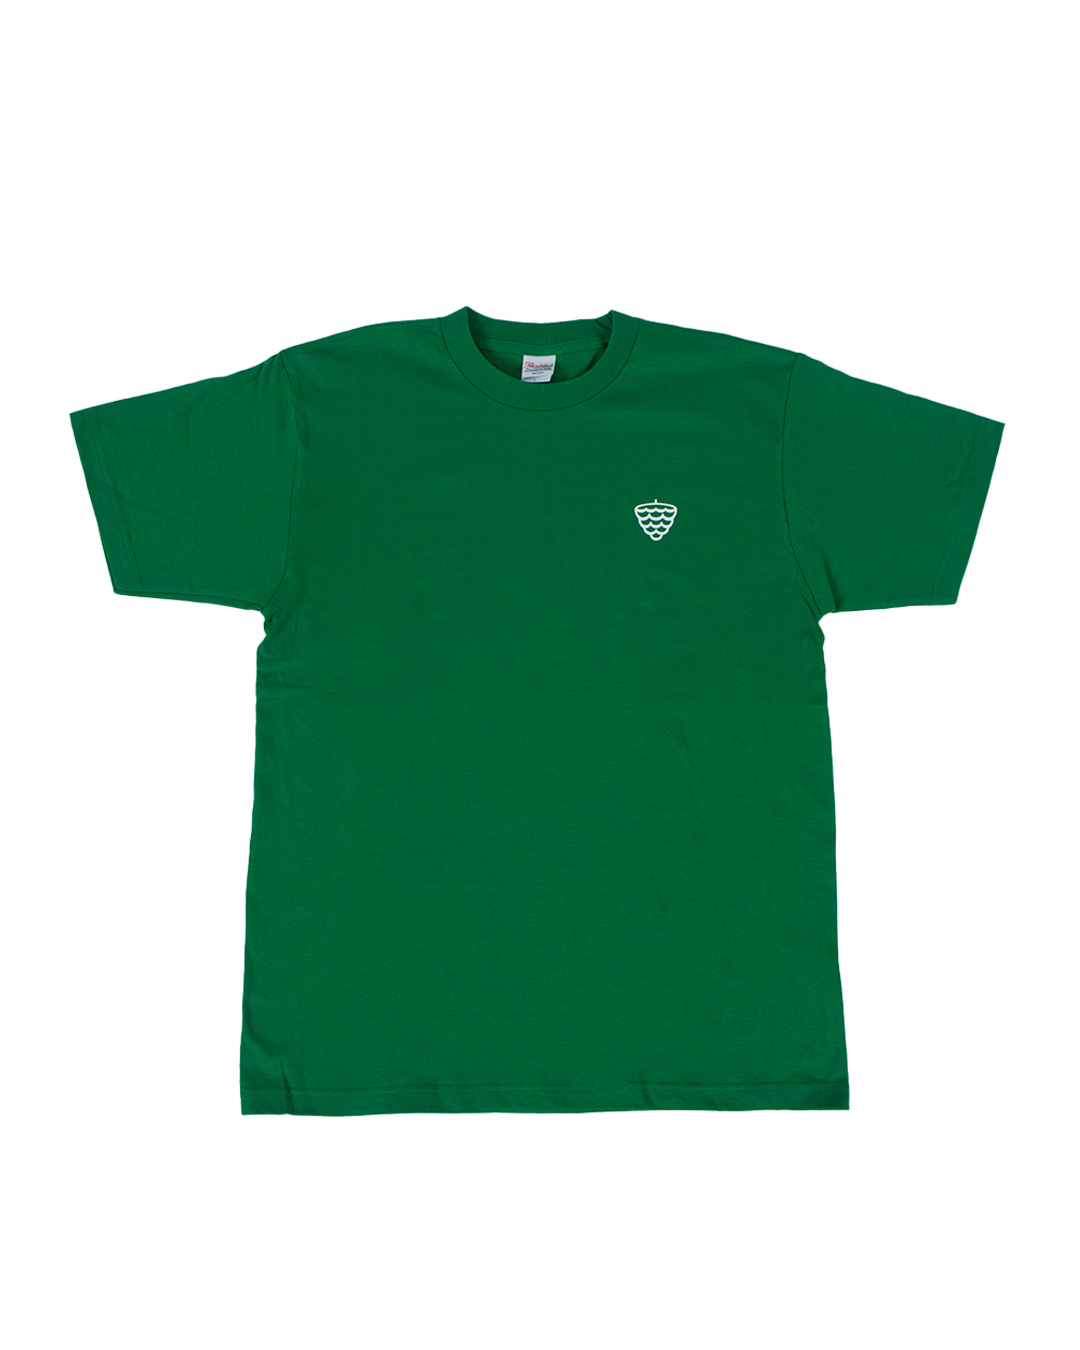 Pineconelab T-Shirts Green